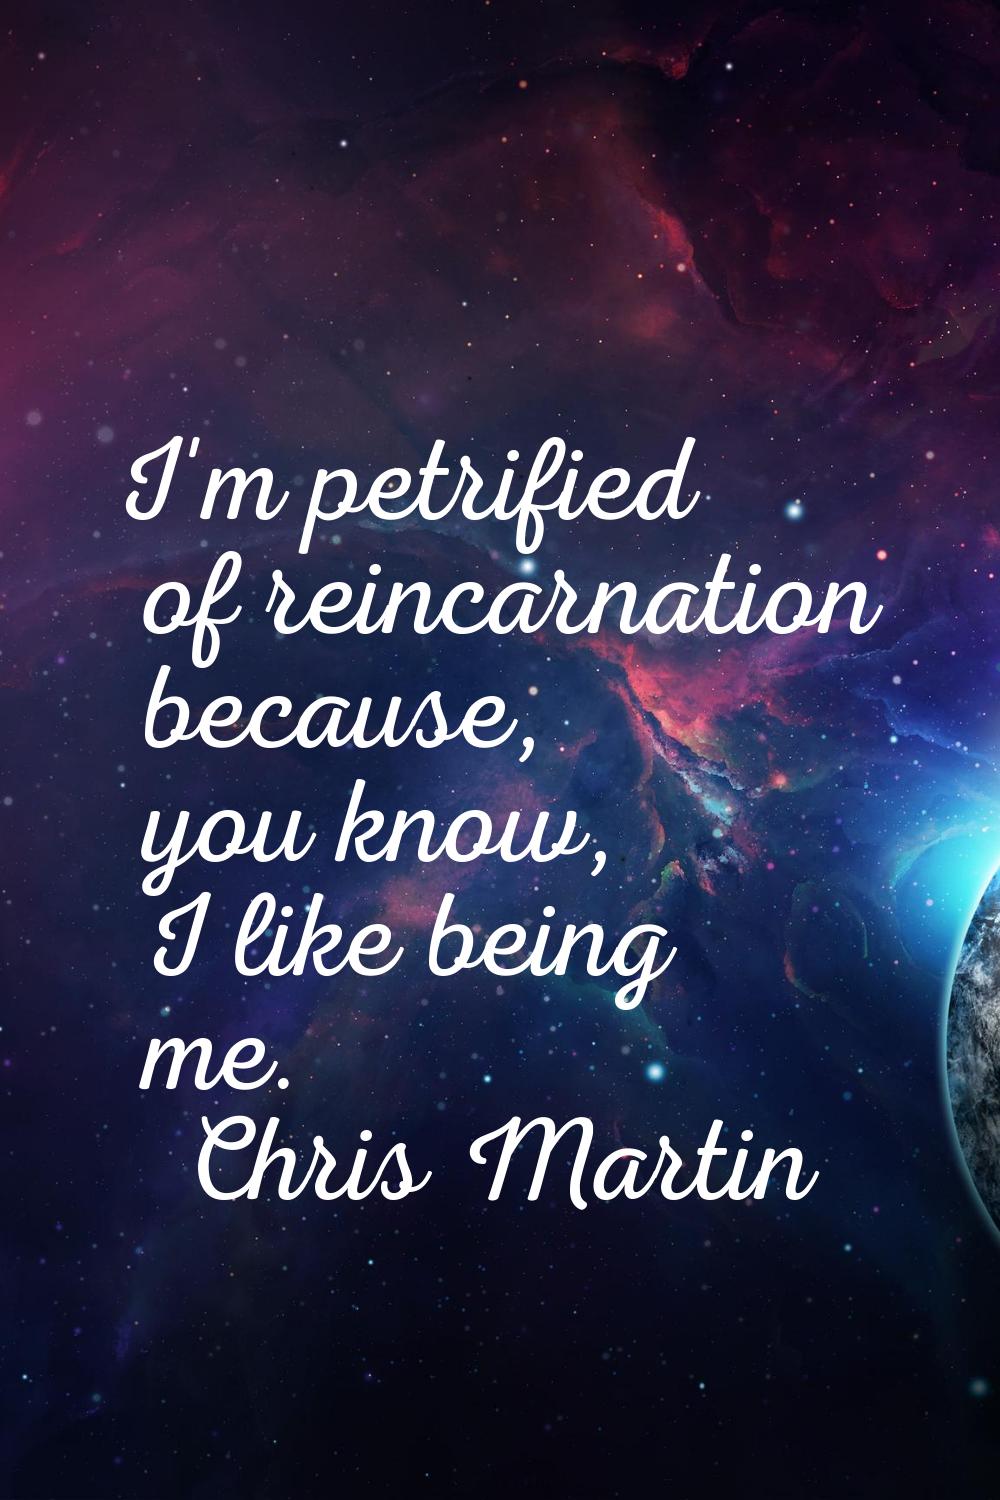 I'm petrified of reincarnation because, you know, I like being me.